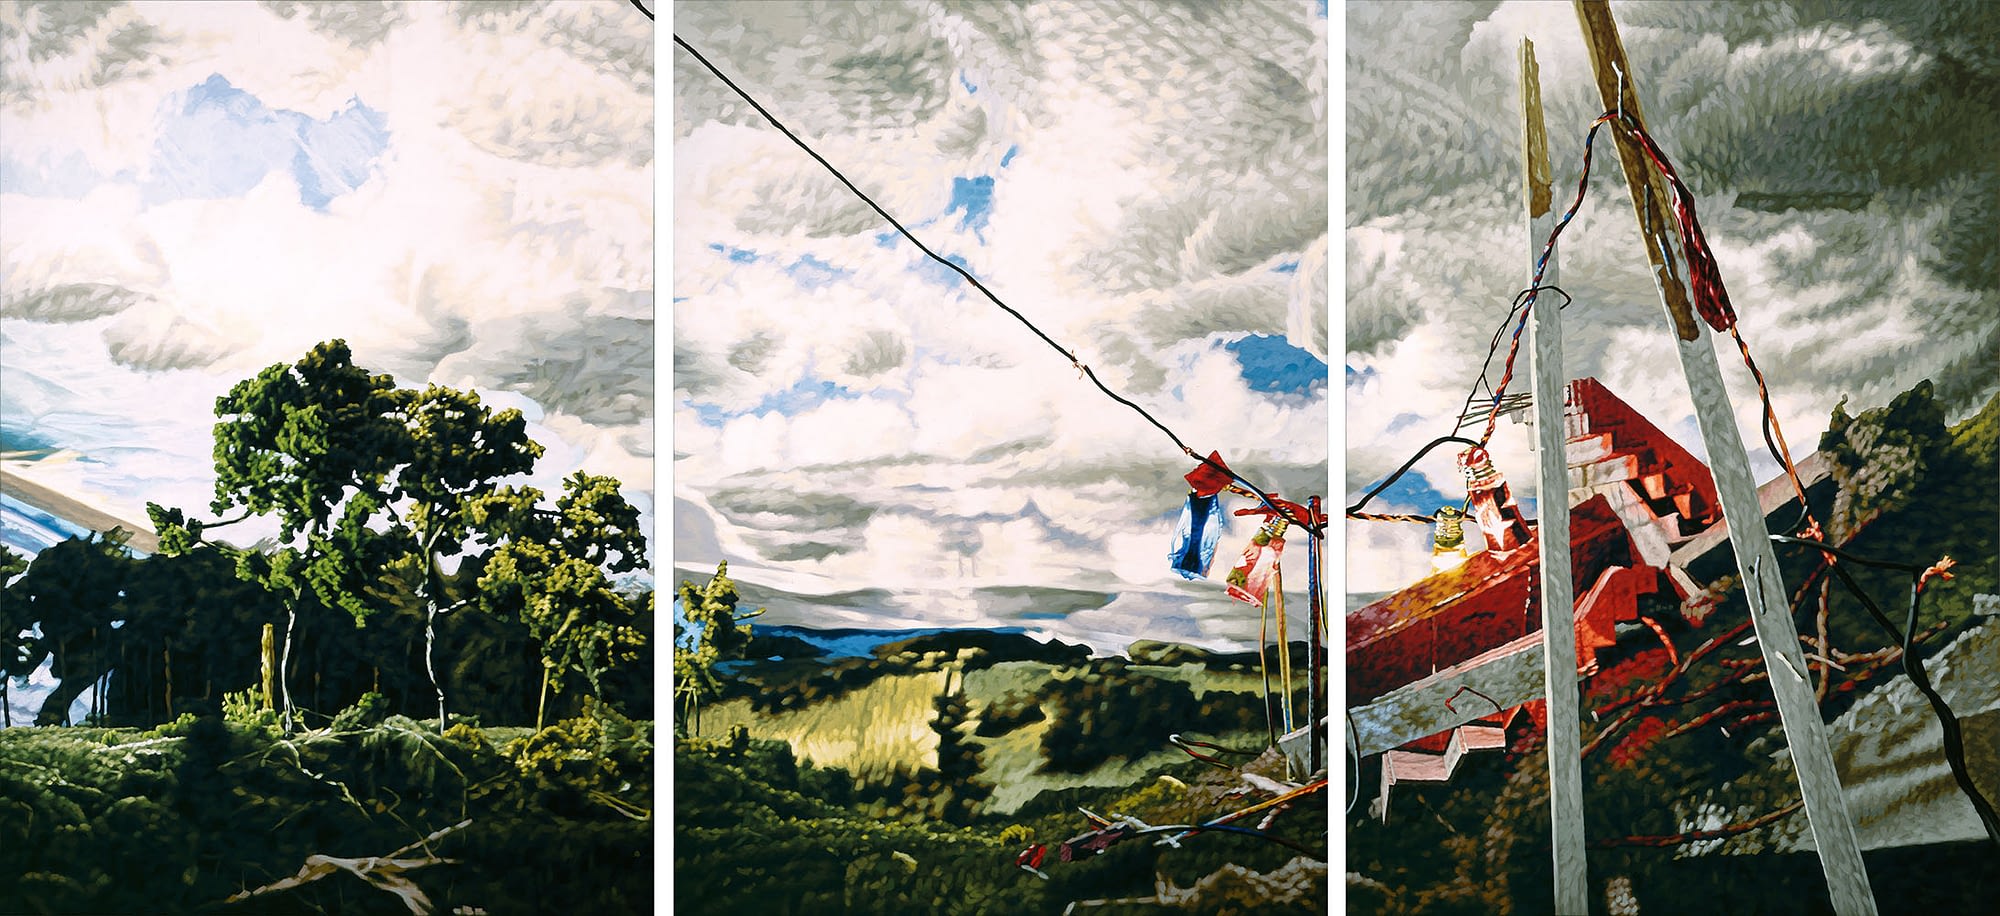 Philipp Fröhlich, Triptych, Painting, Landscape, Ruins, MUSAC, (031LT), 2007. tempera on canvas, triptych 245 x 535 cm